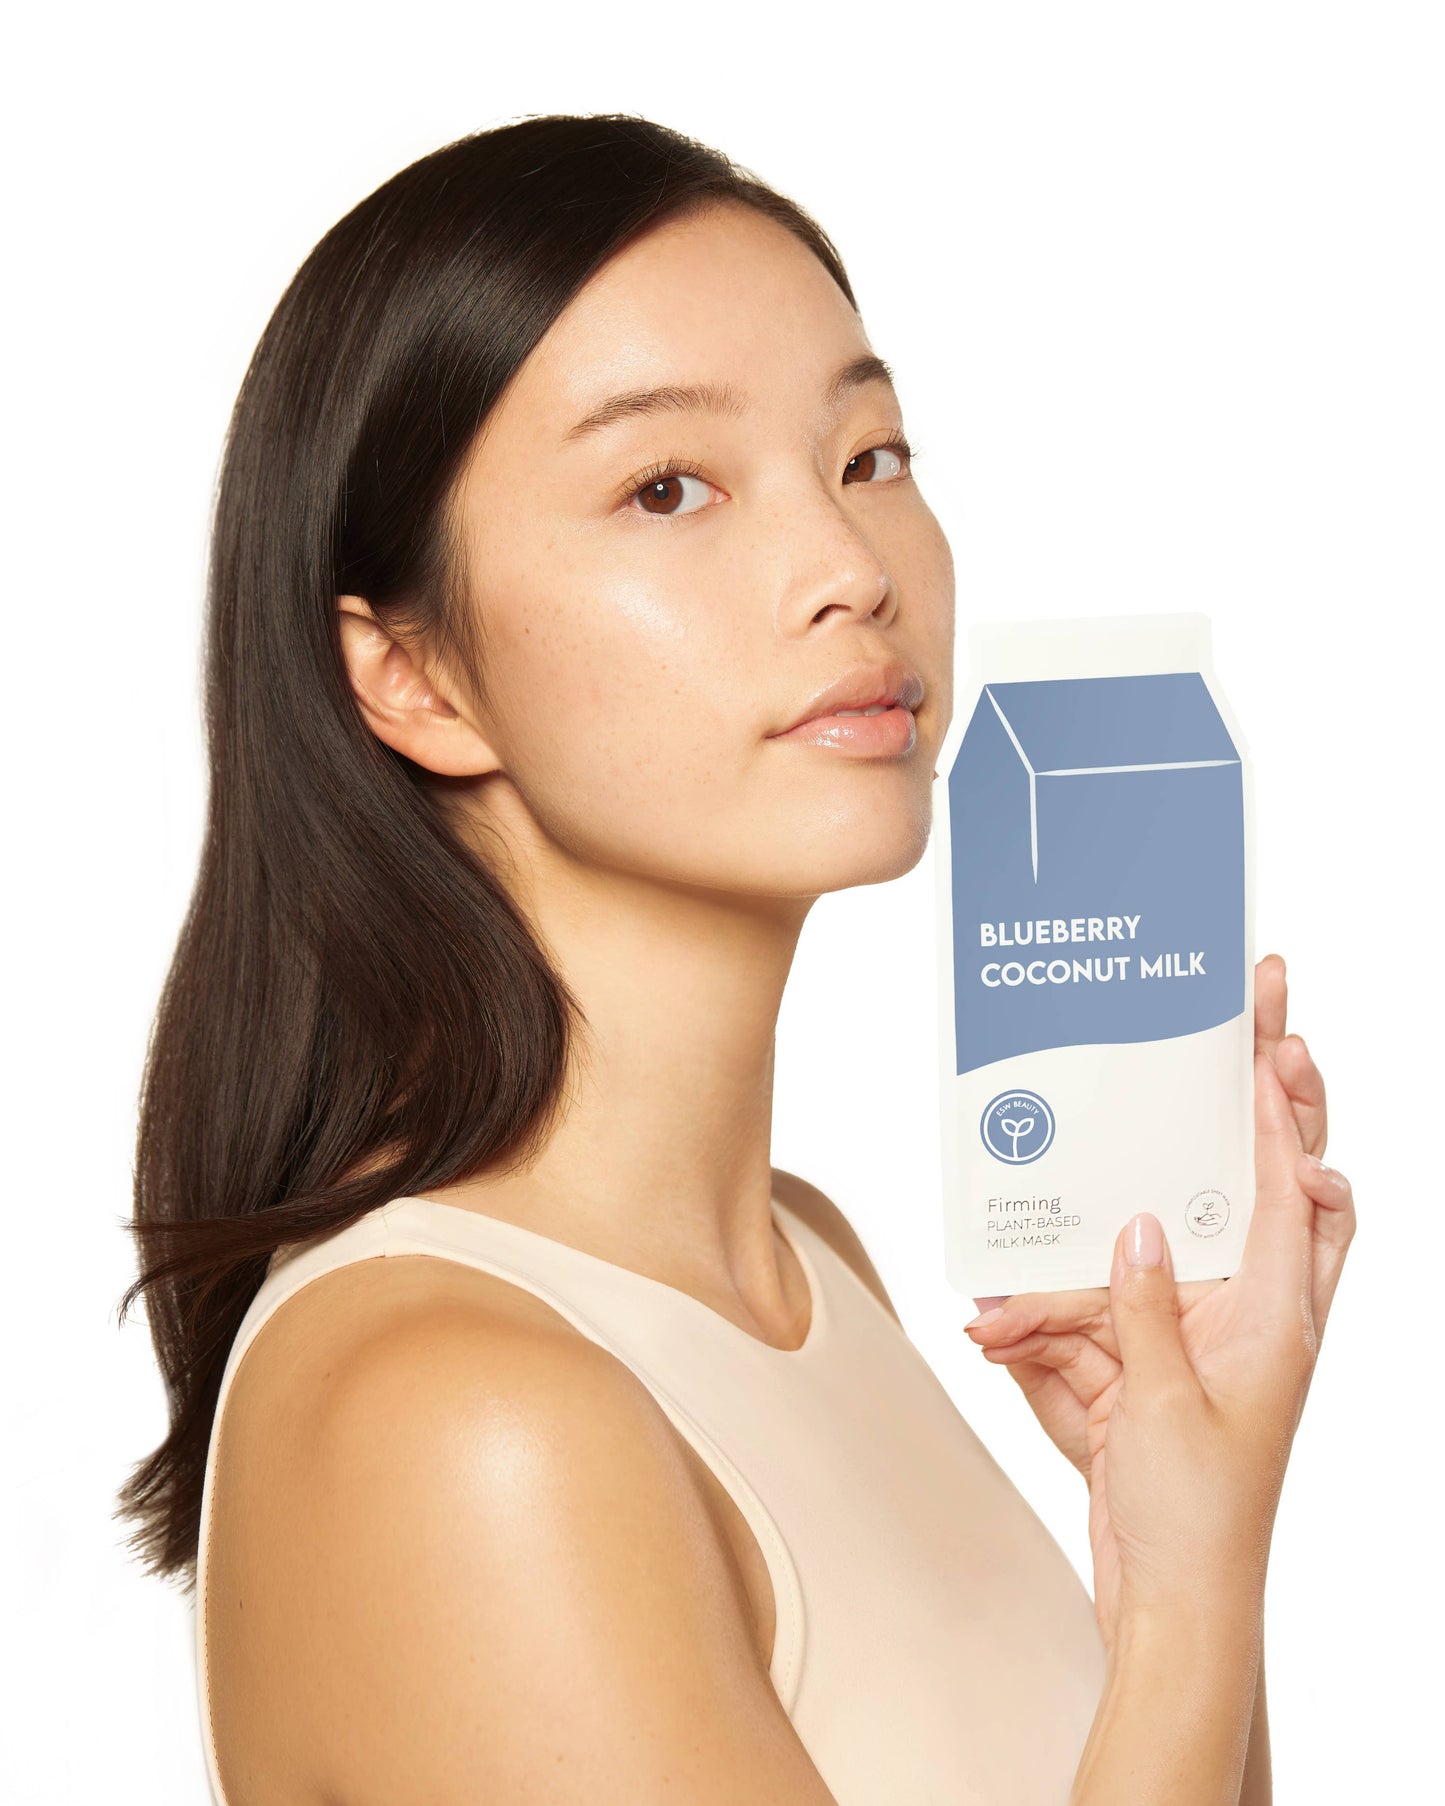 ESW Beauty - Blueberry Coconut Milk Firming Plant-Based Milk Sheet Mask: Regular